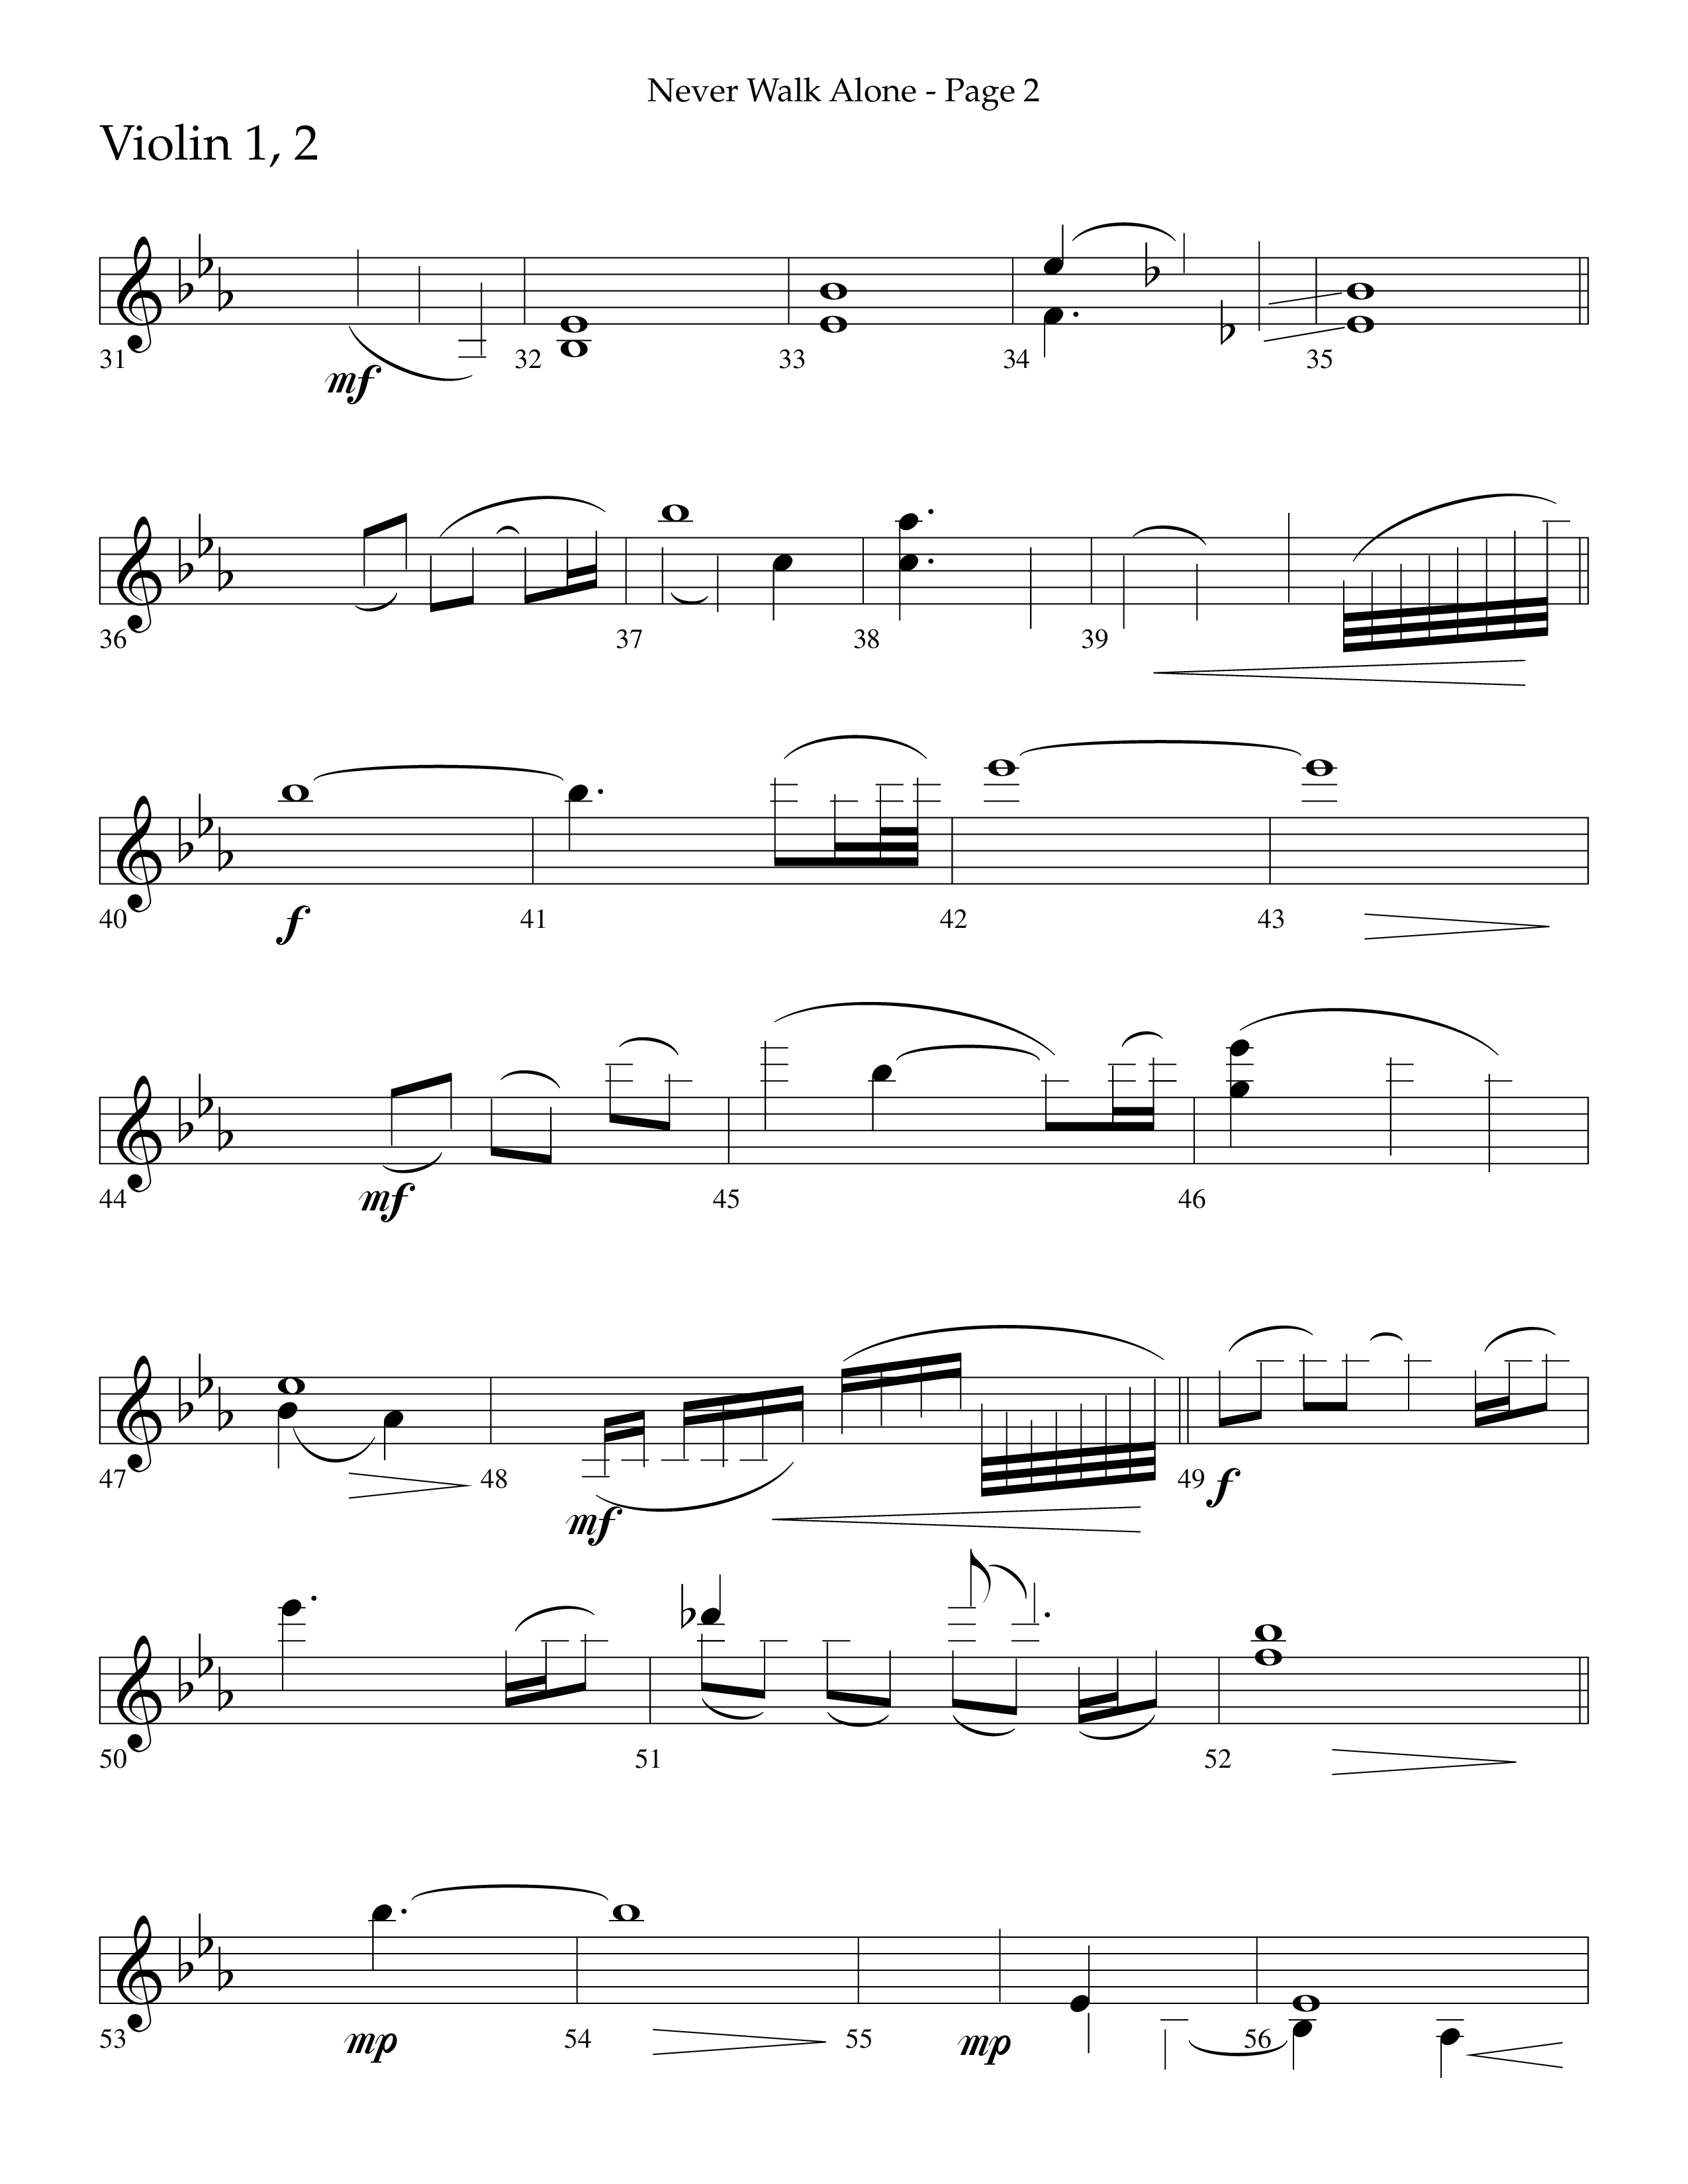 Never Walk Alone (Choral Anthem SATB) Violin 1/2 (Lifeway Choral / Arr. Russell Mauldin)